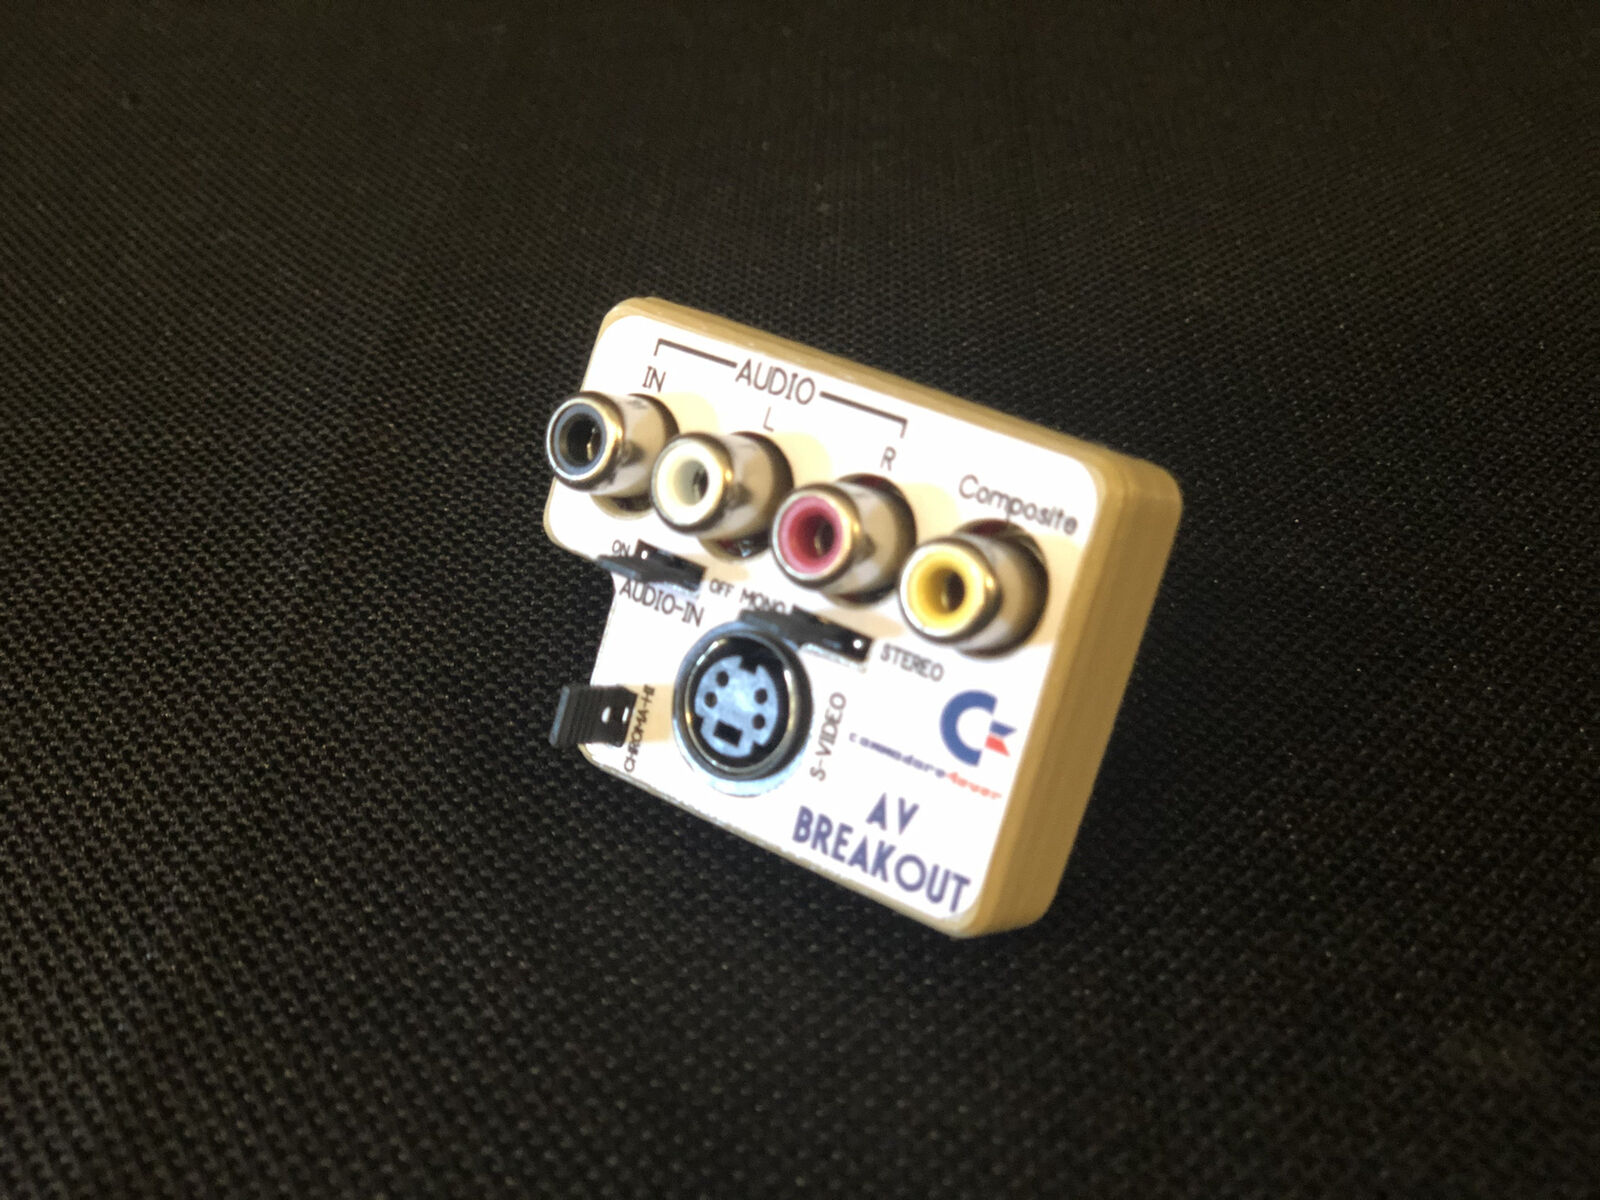 Commodore 64 A/V Breakout 8 pin